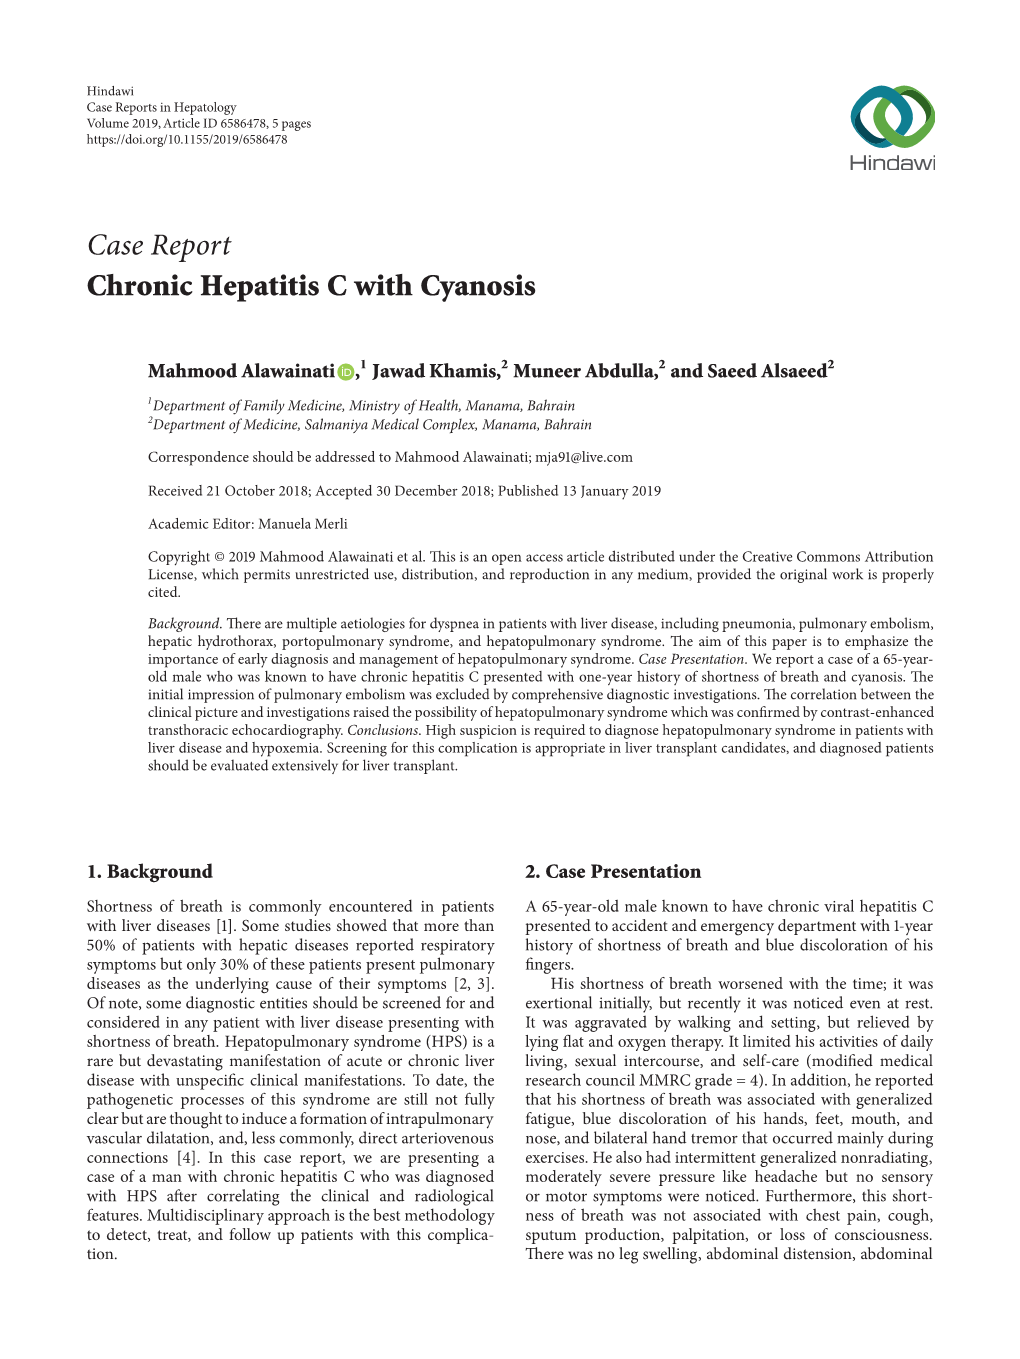 Case Report Chronic Hepatitis C with Cyanosis